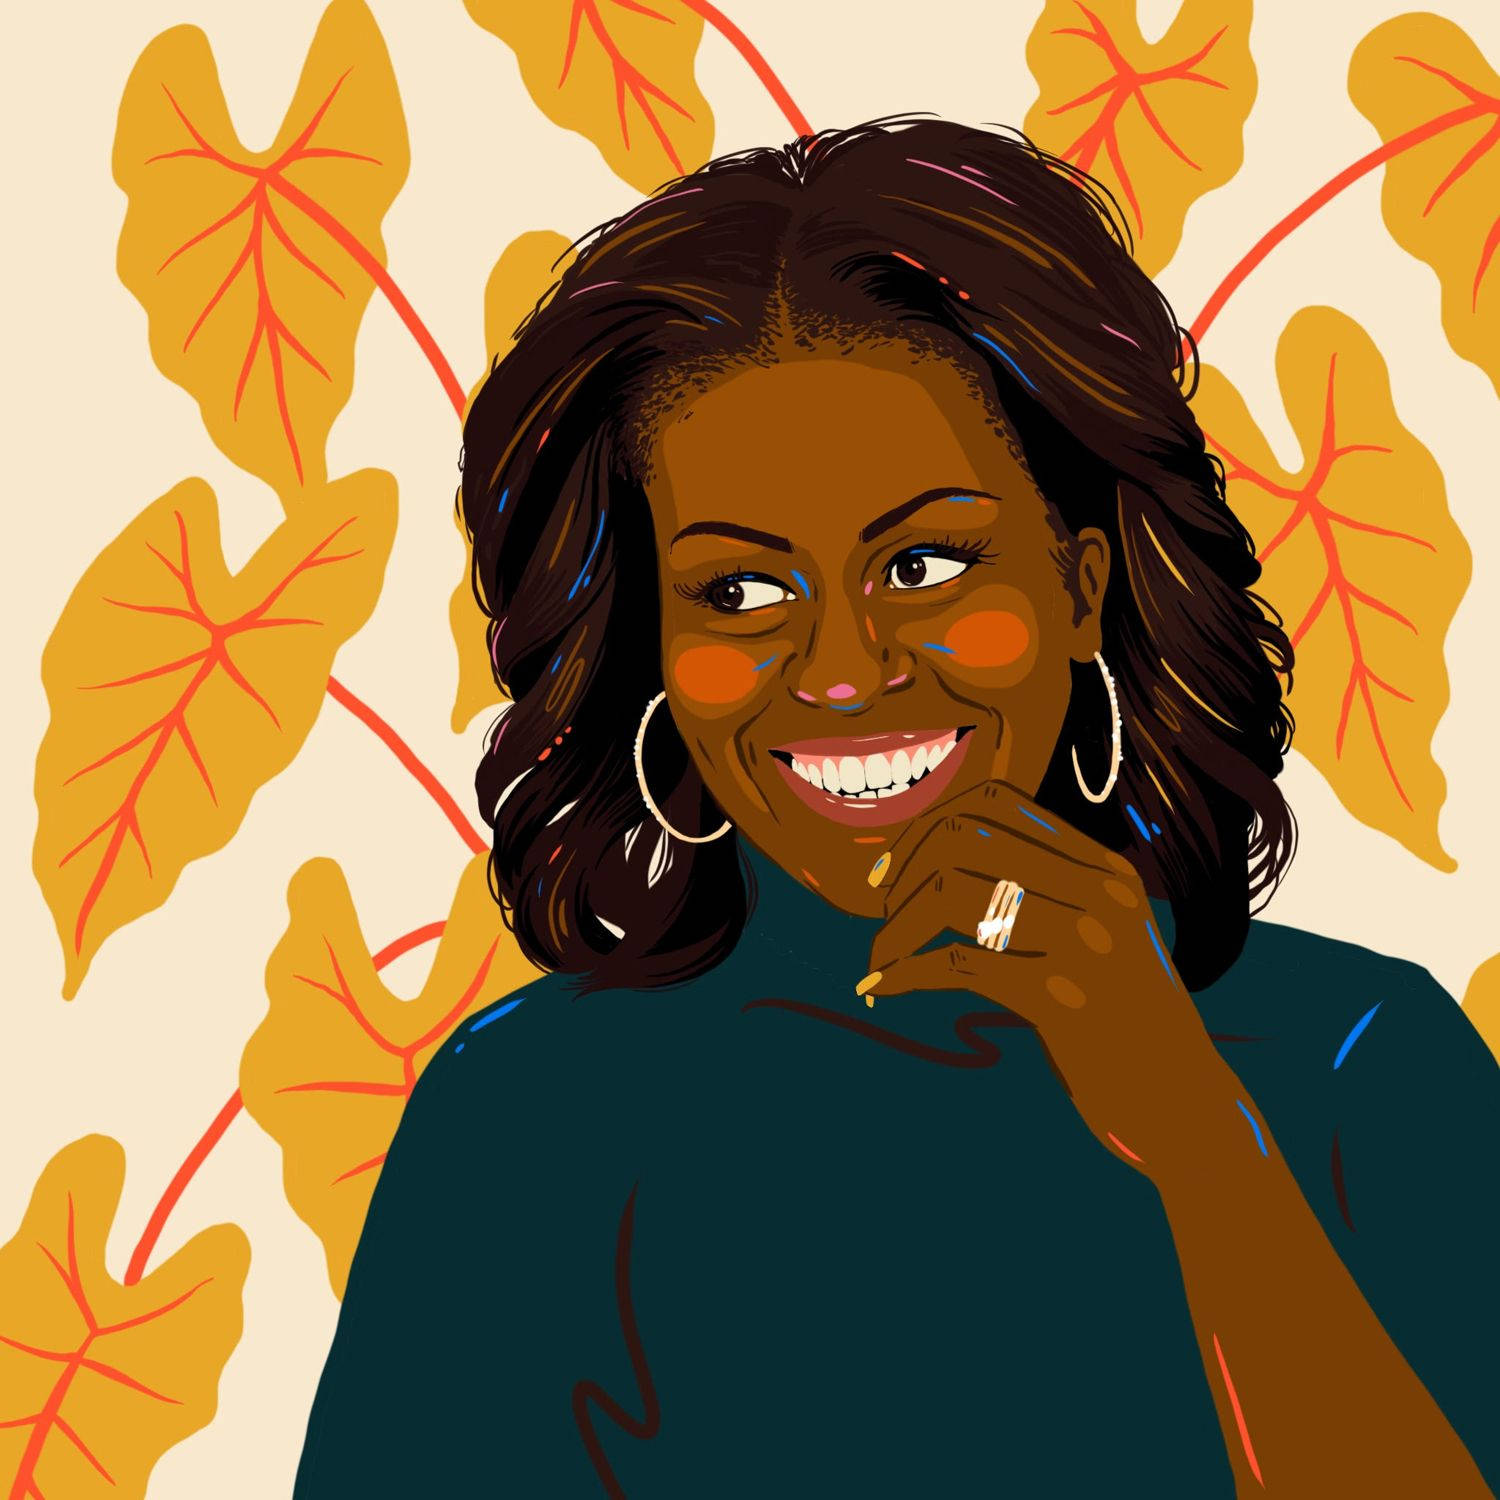 Michelle Obama Digital Art Wallpaper